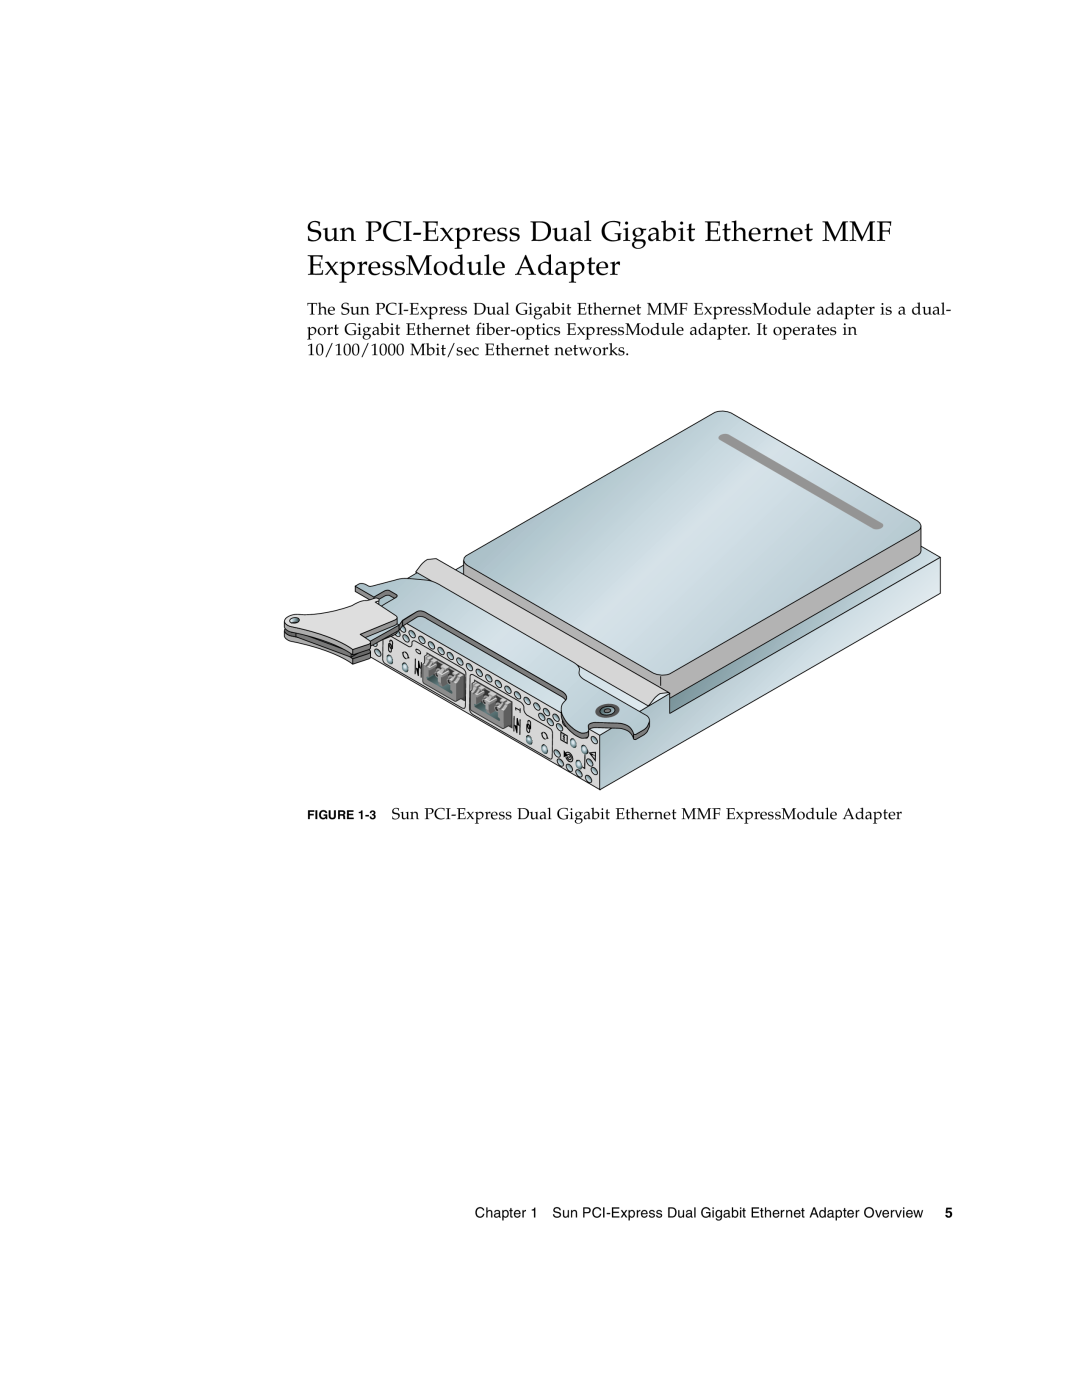 Sun Microsystems Gigabit Ethernet MMF/UTP Adapter manual Sun PCI-Express Dual Gigabit Ethernet MMF ExpressModule Adapter 